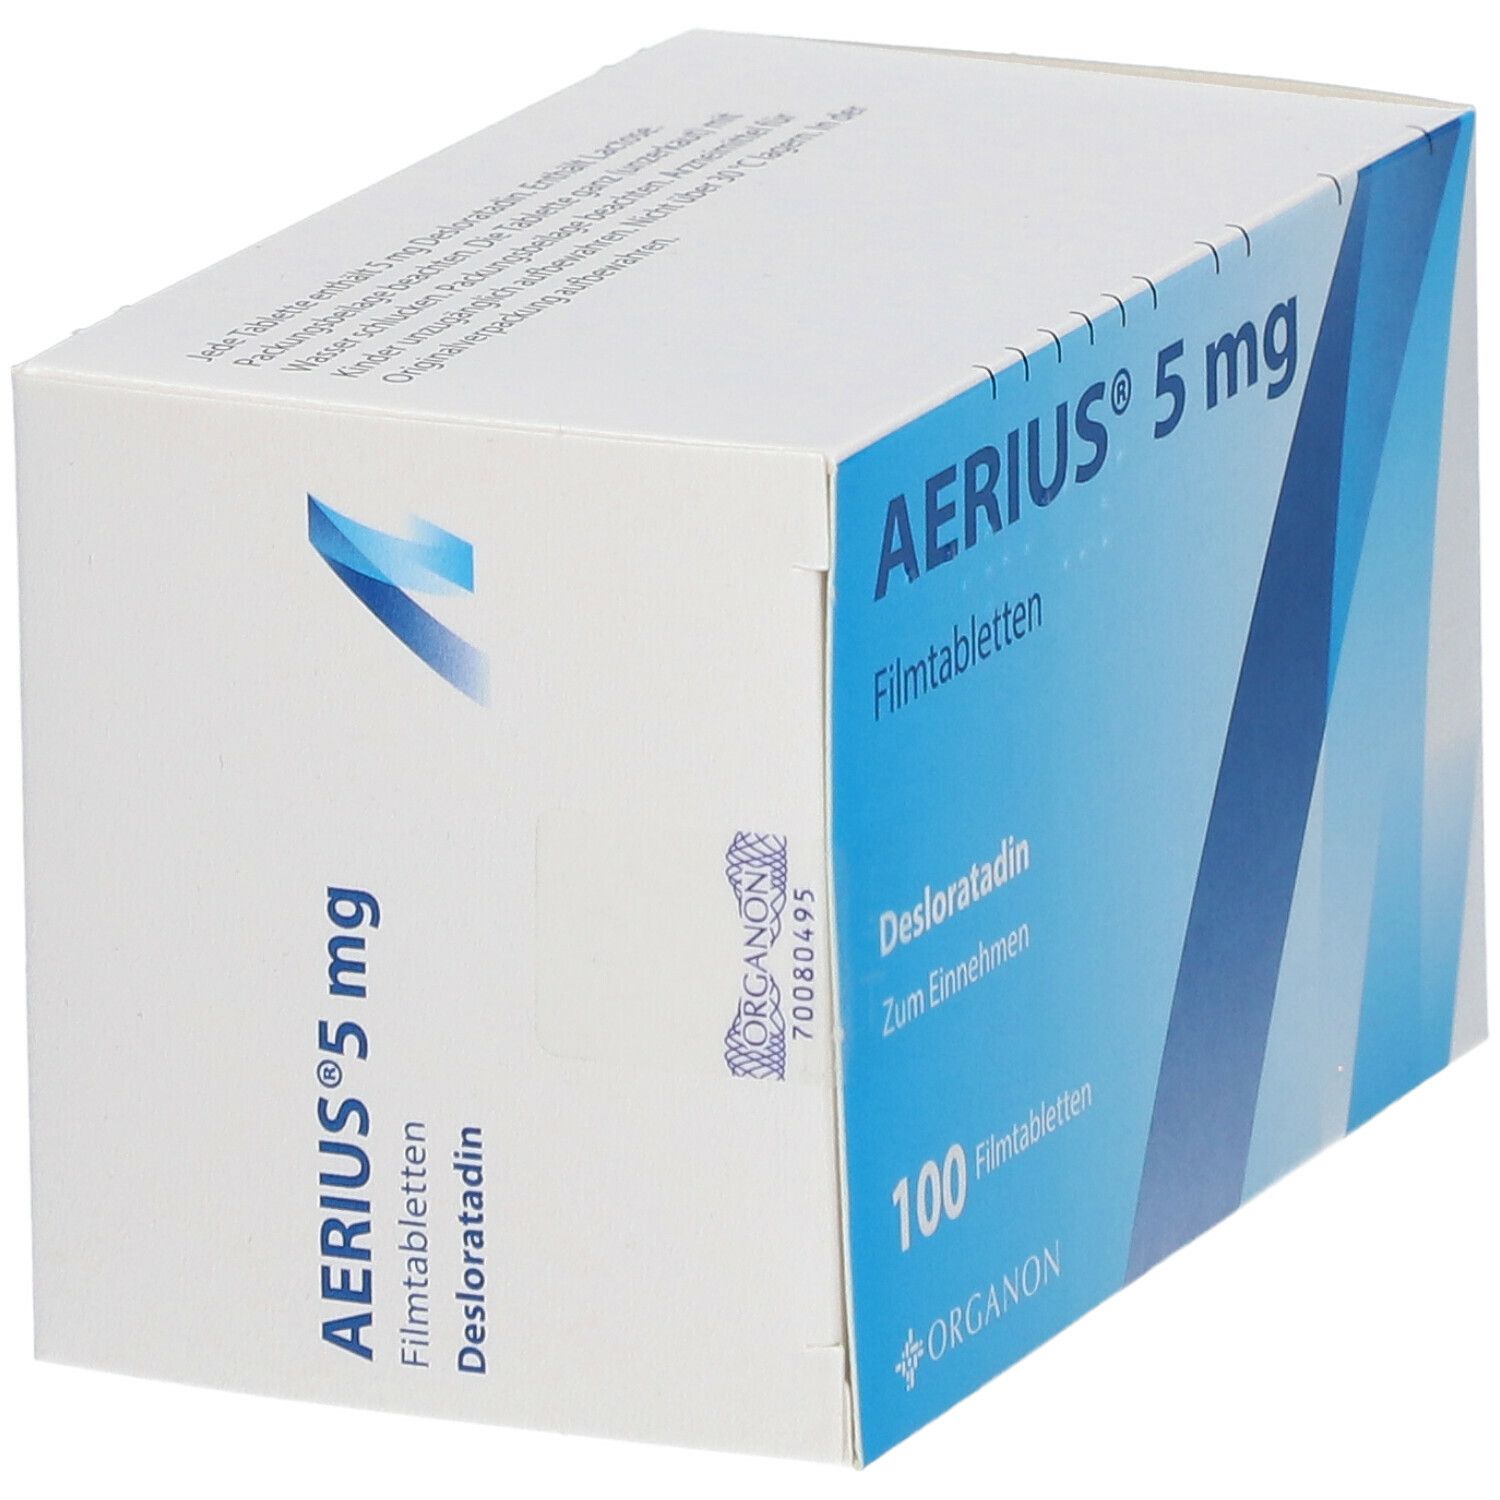 AERIUS® 5 mg